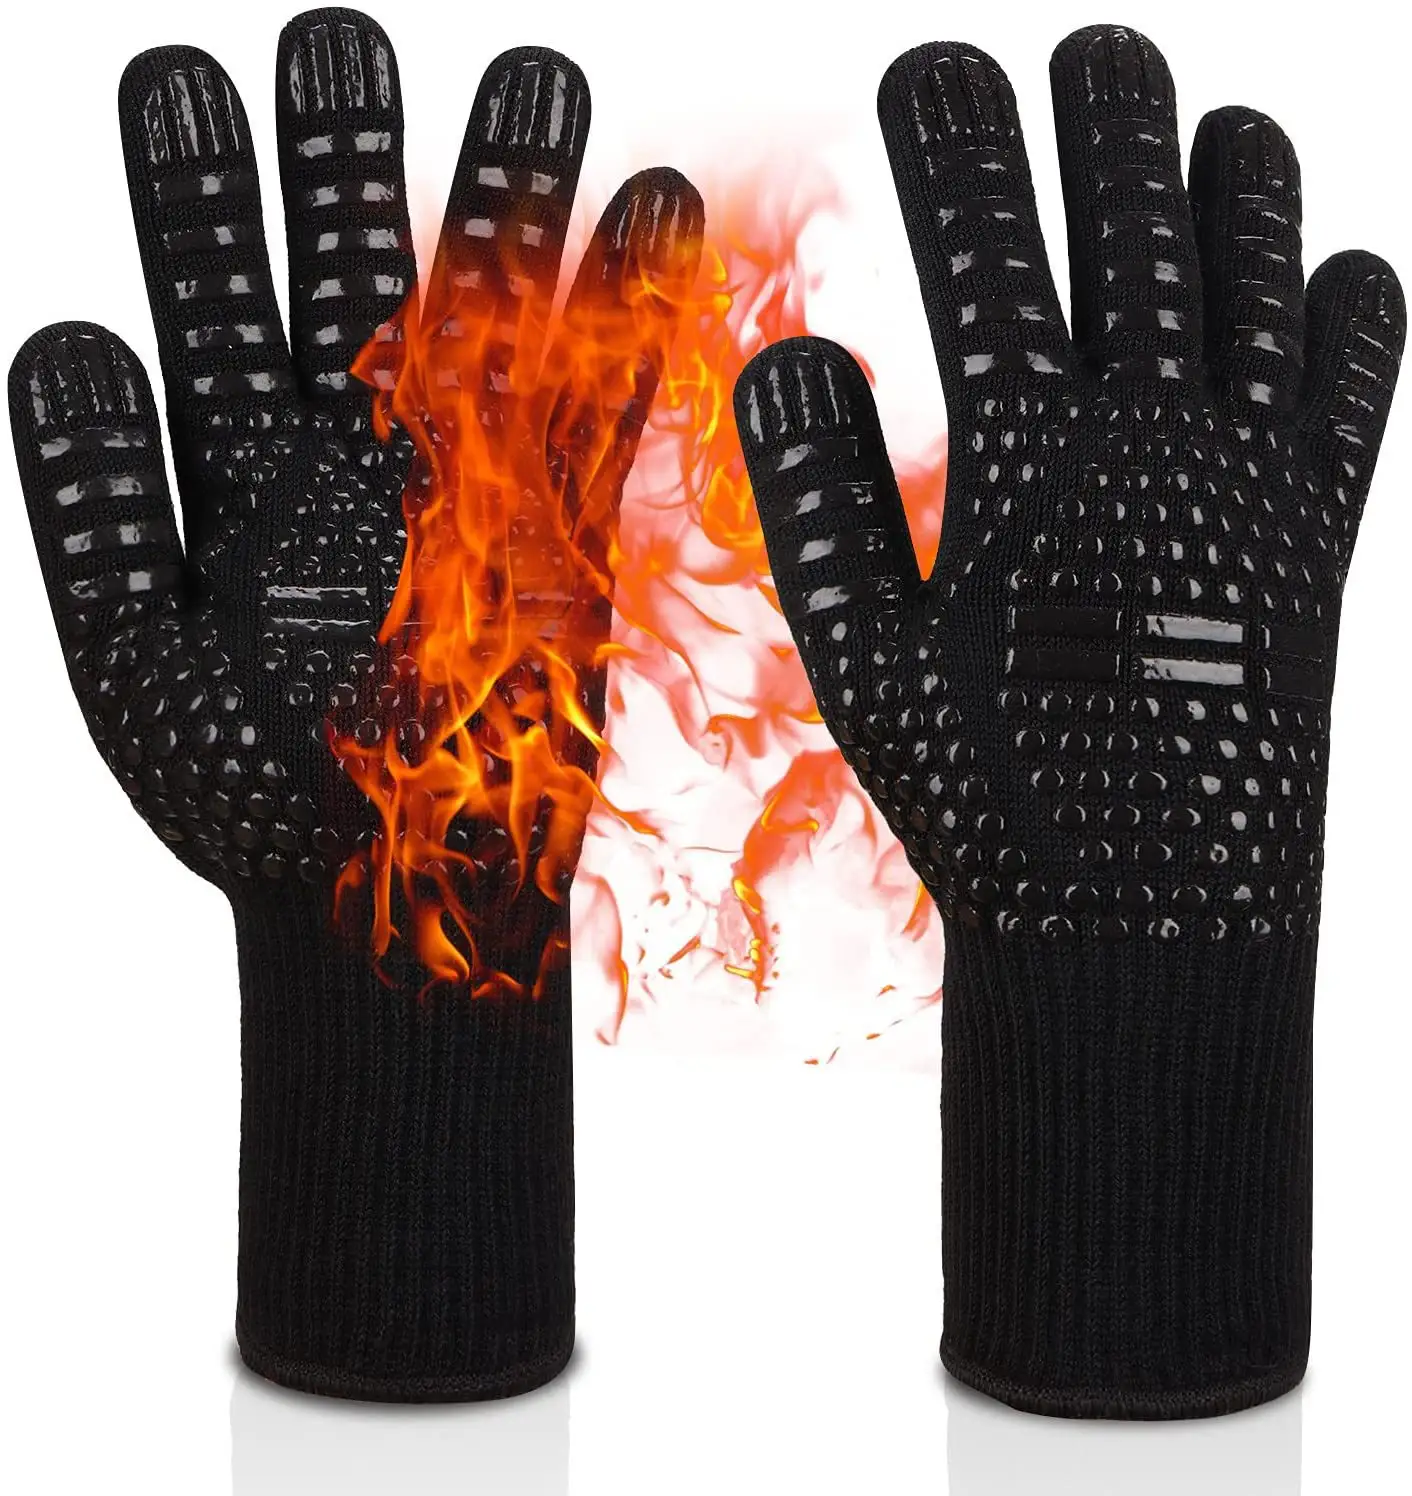 New Aramid Churrasco Algodão Silicone Forno Mitts Luvas Extreme Heat Resistant Glove Grill BBQ Luva para Cozinhar Cozimento